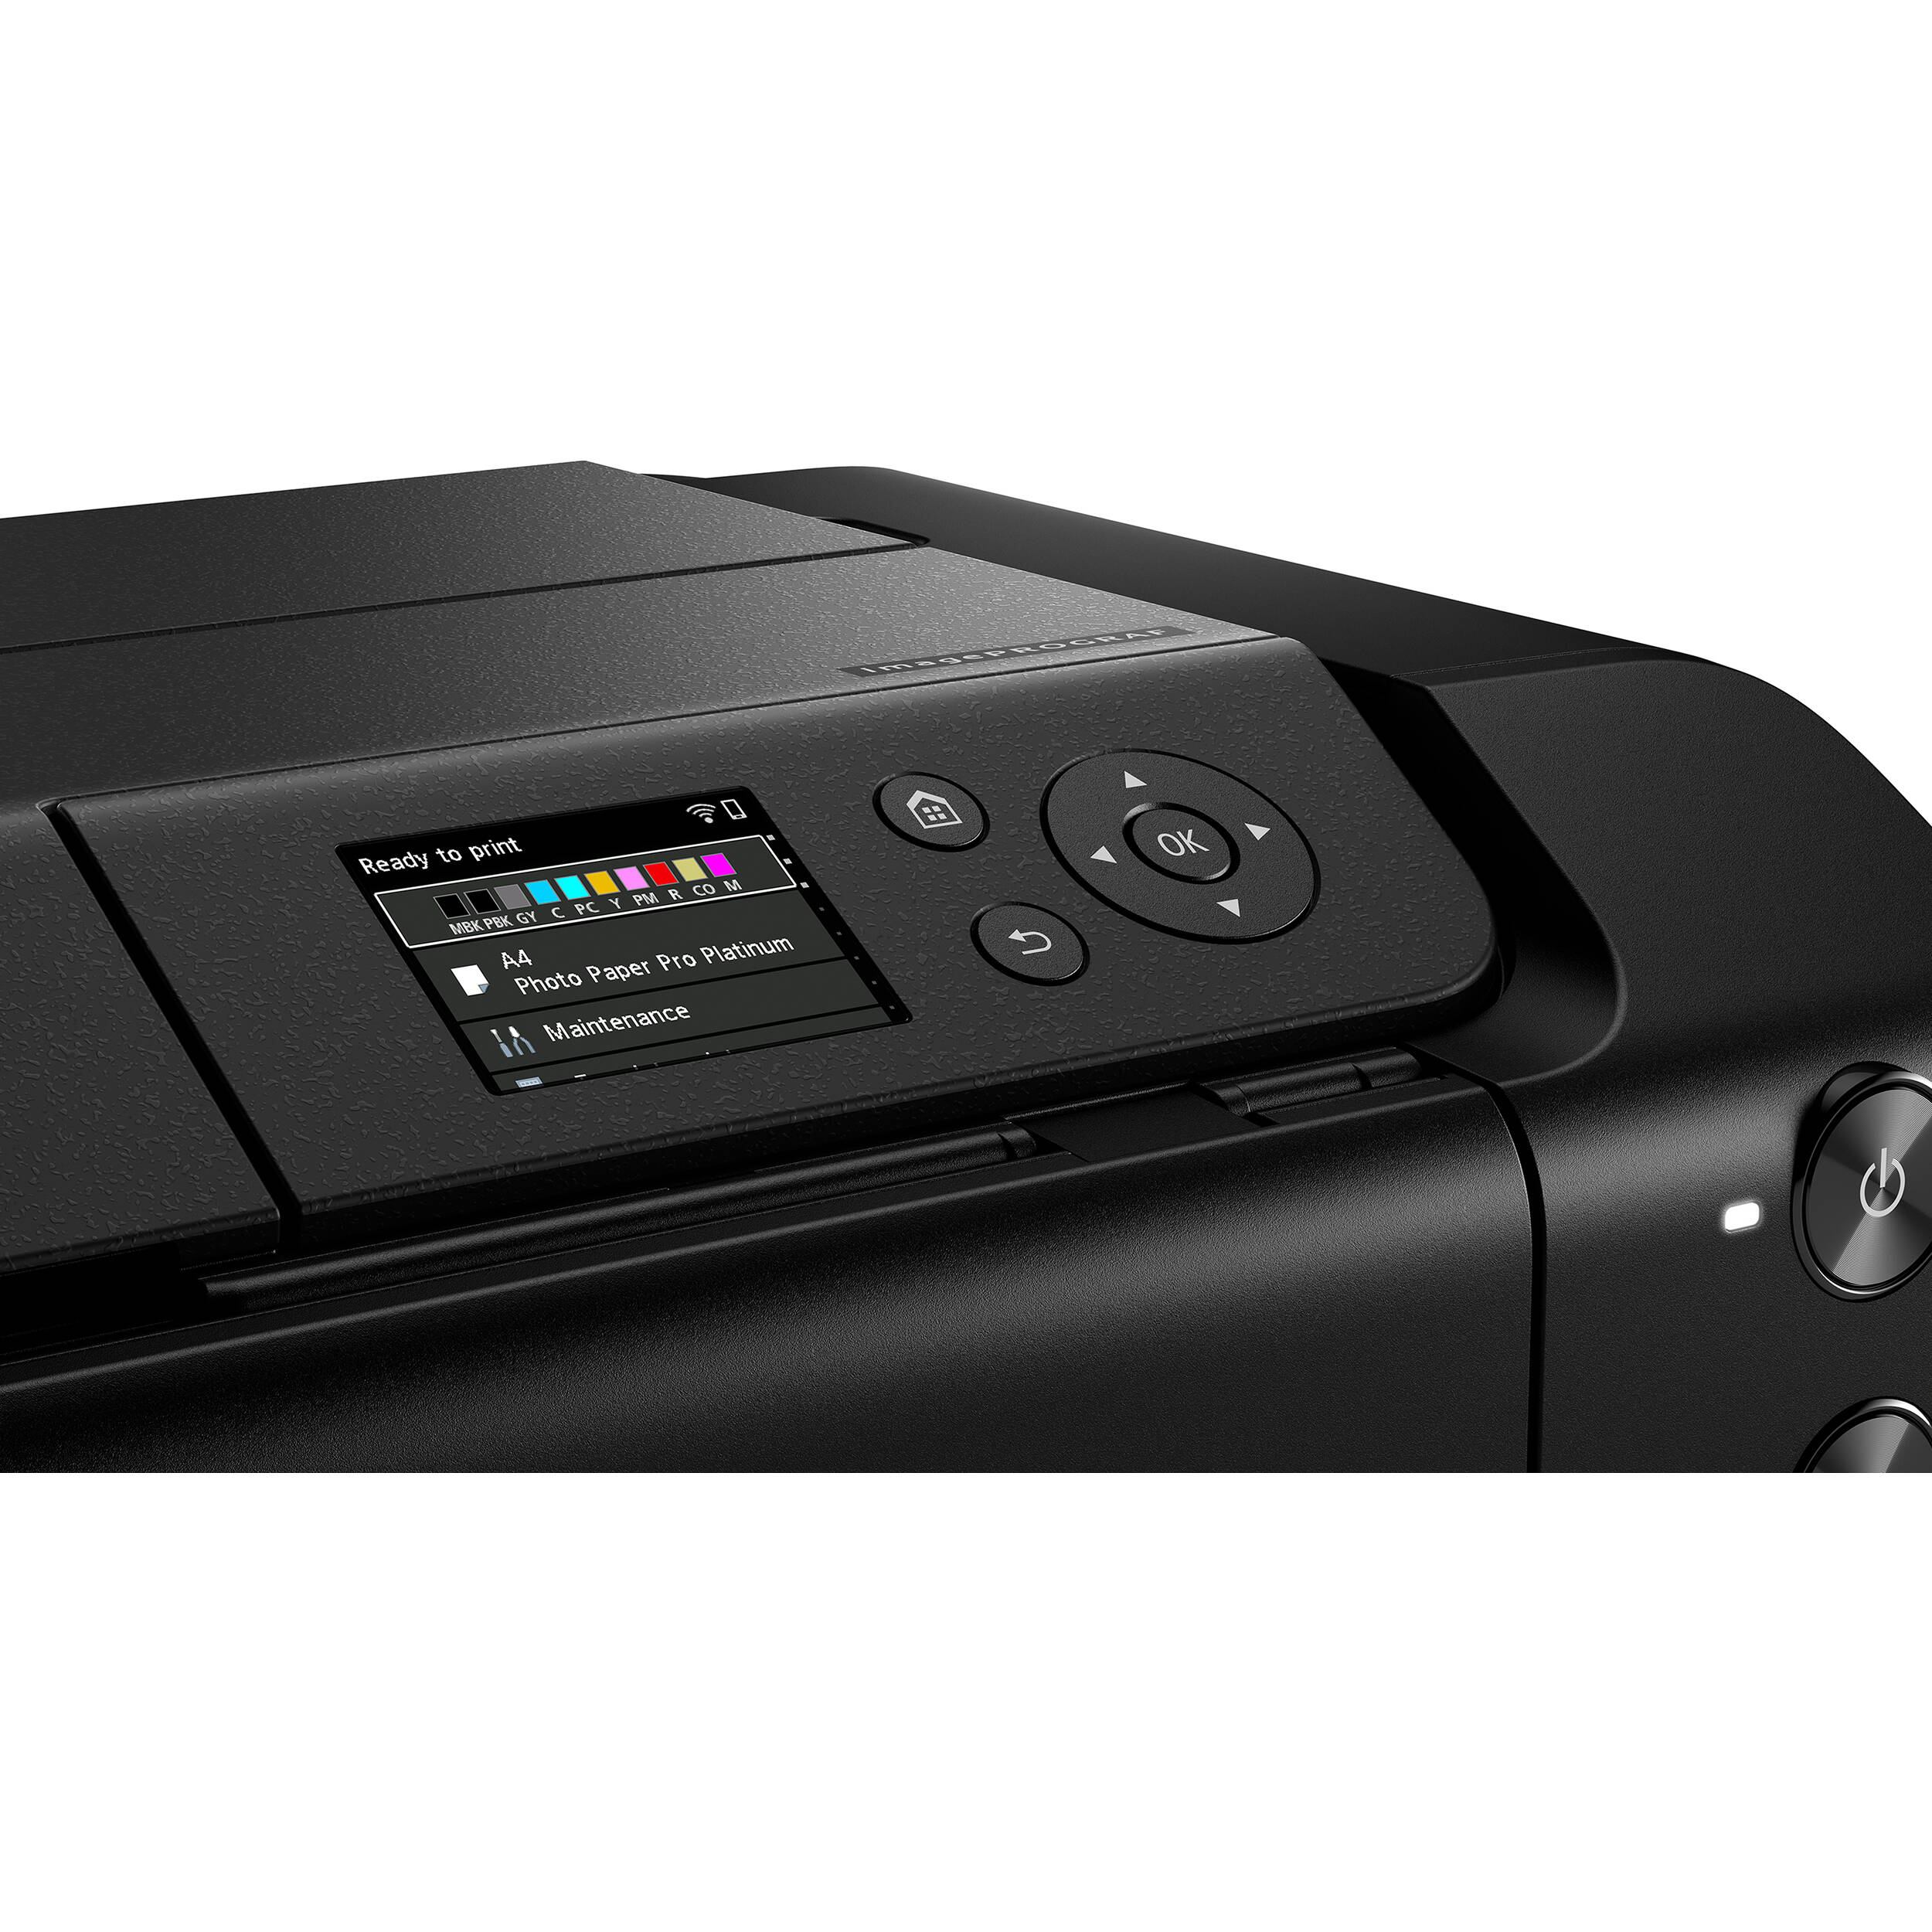 Canon ImagePROGRAF PRO 300 Printer- Damaged Box